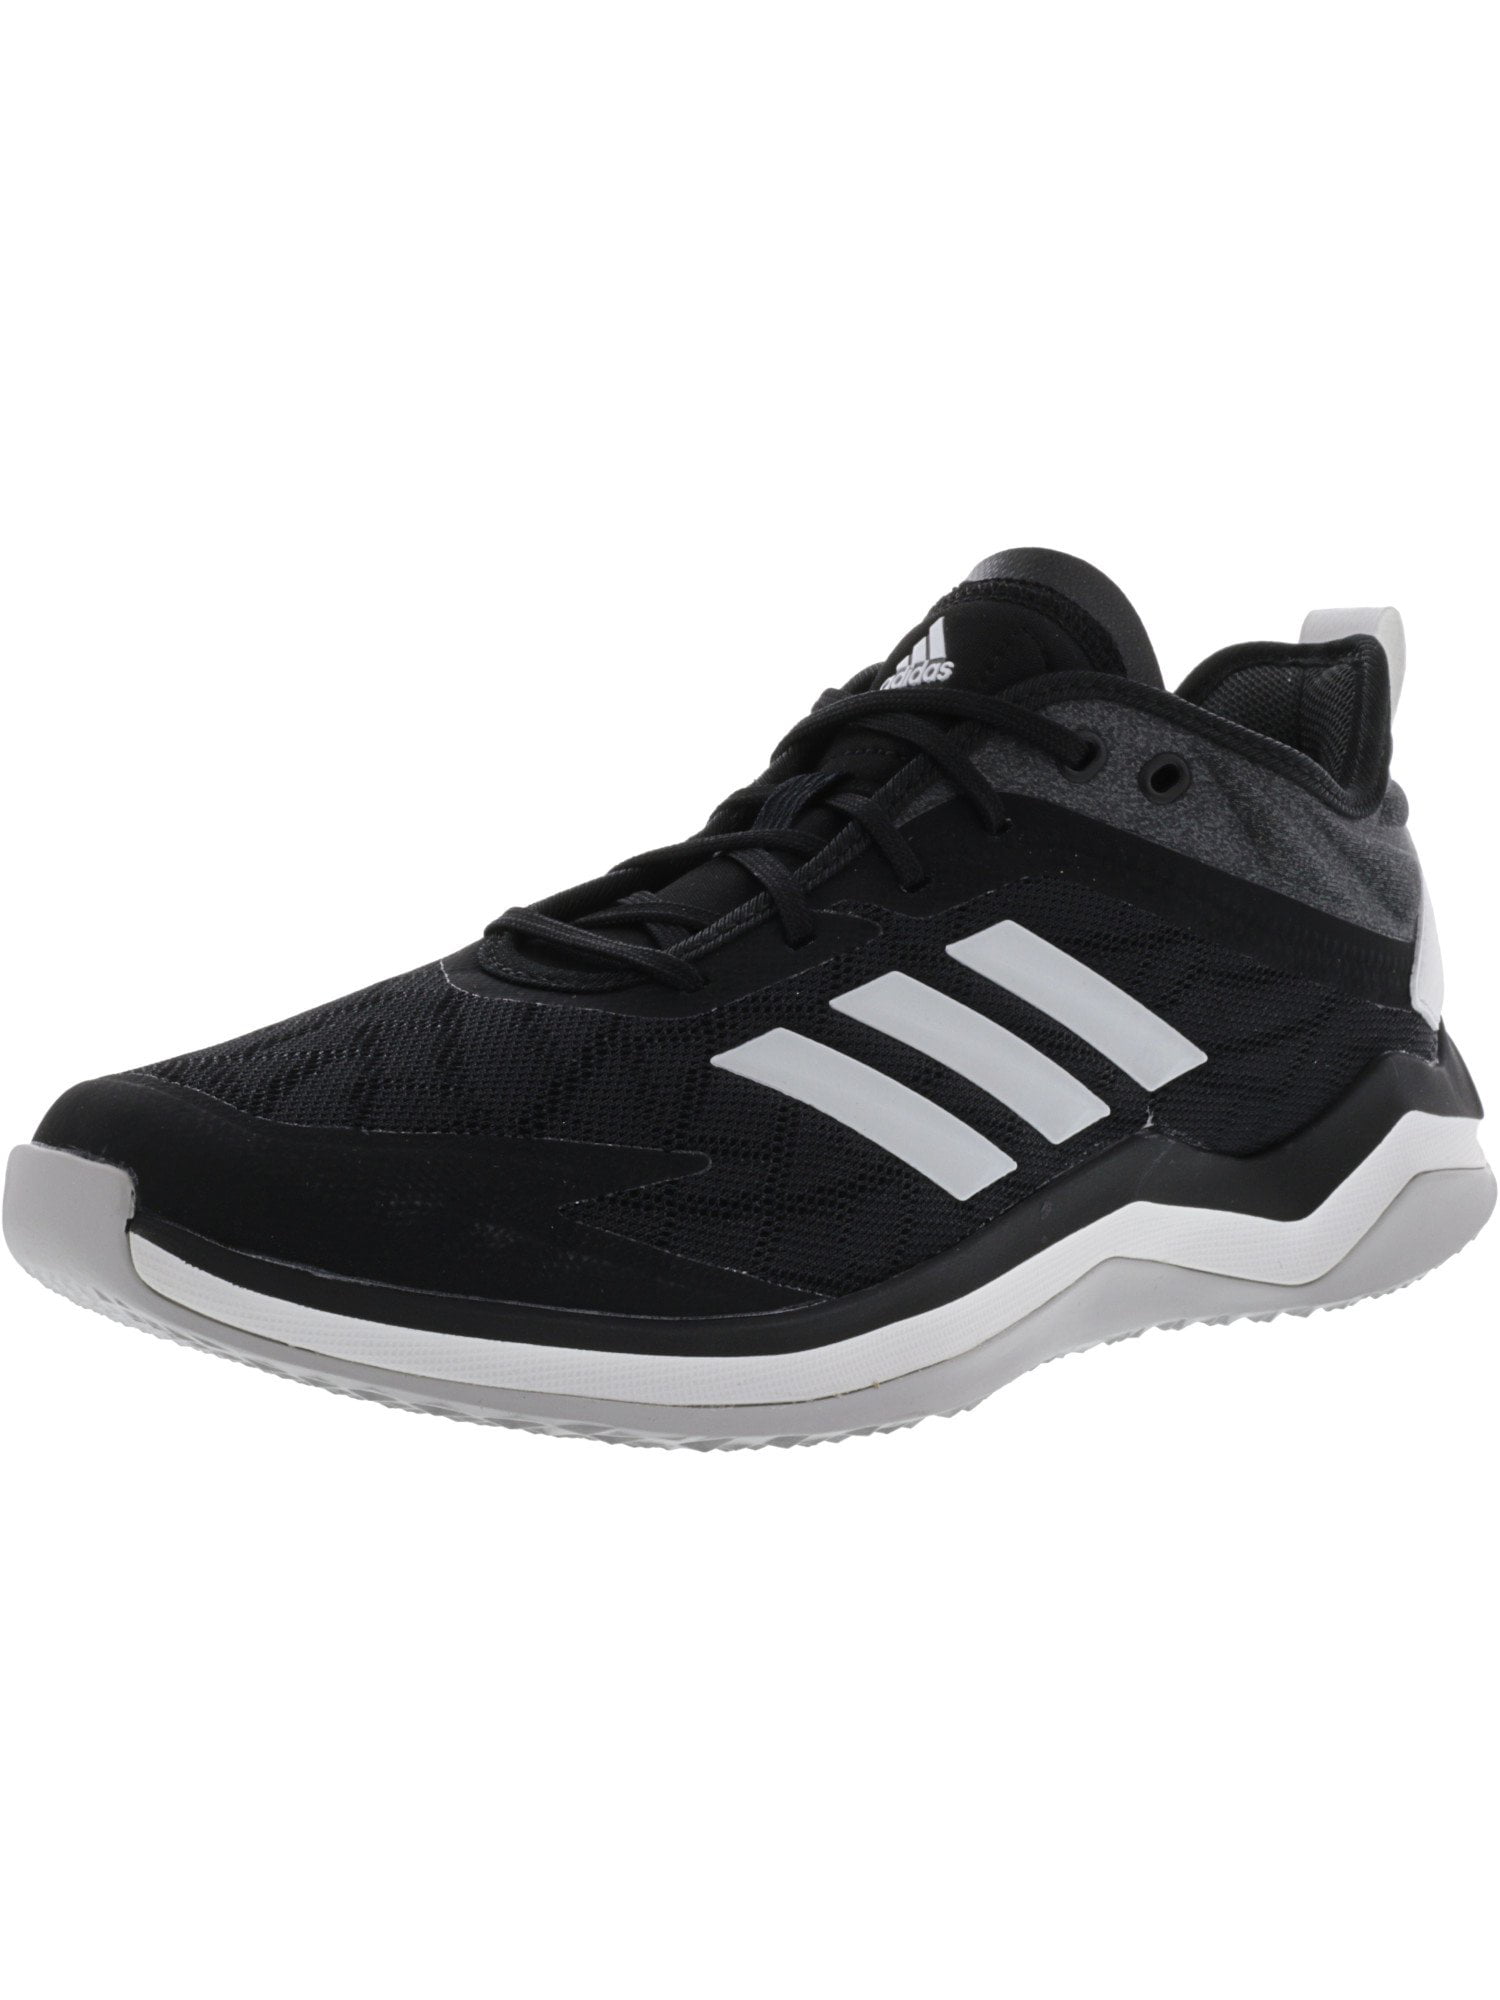 adidas speed trainer 4 black